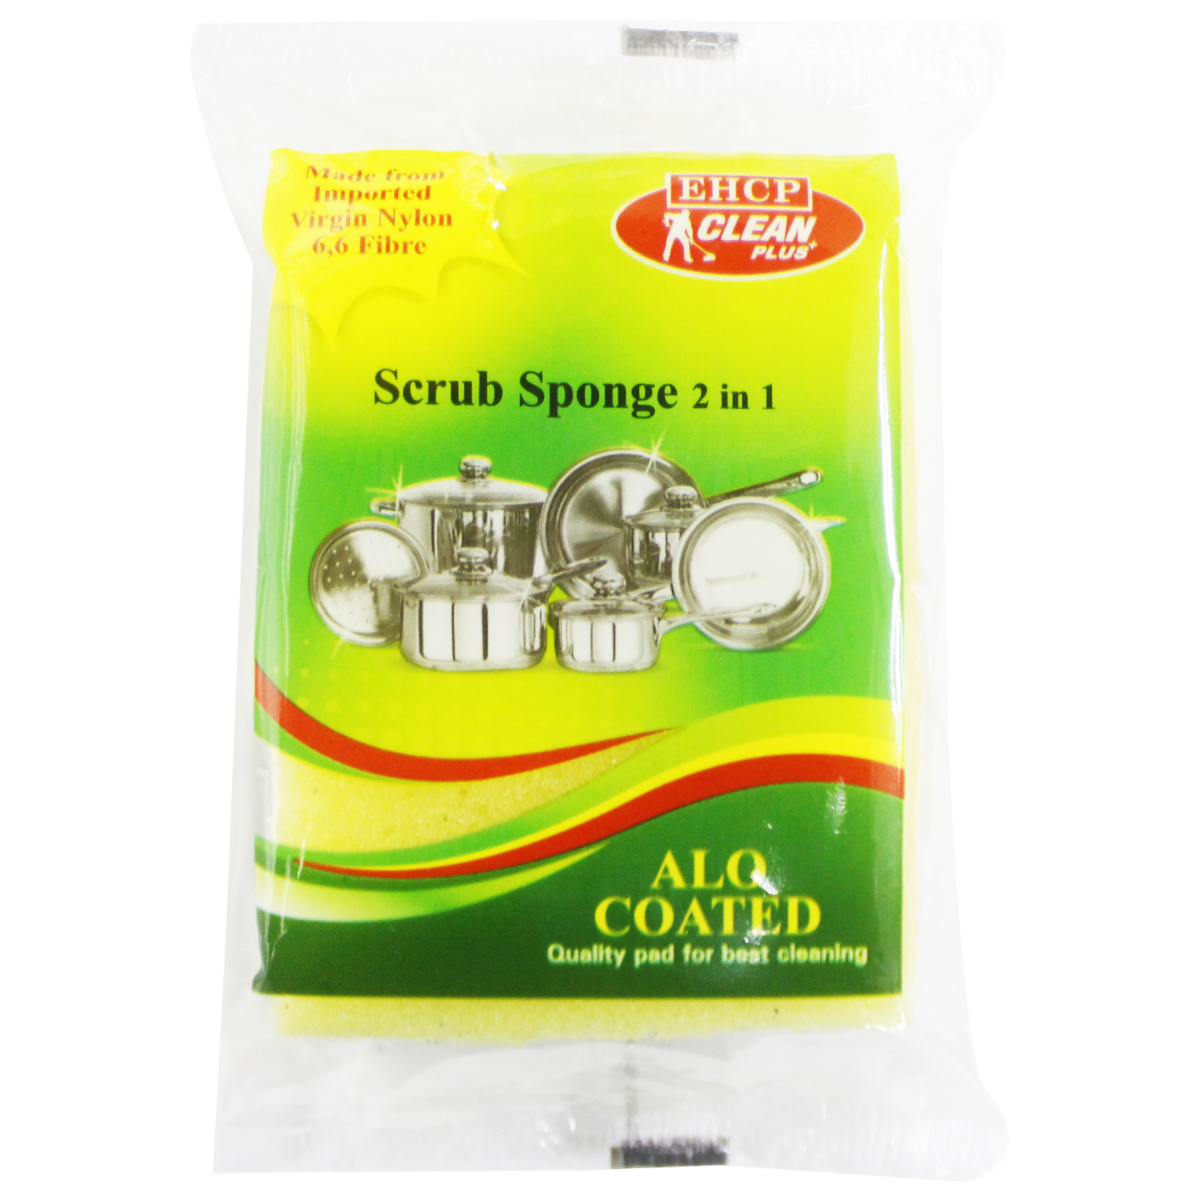 Clean Plus Scrub Sponge 2in1